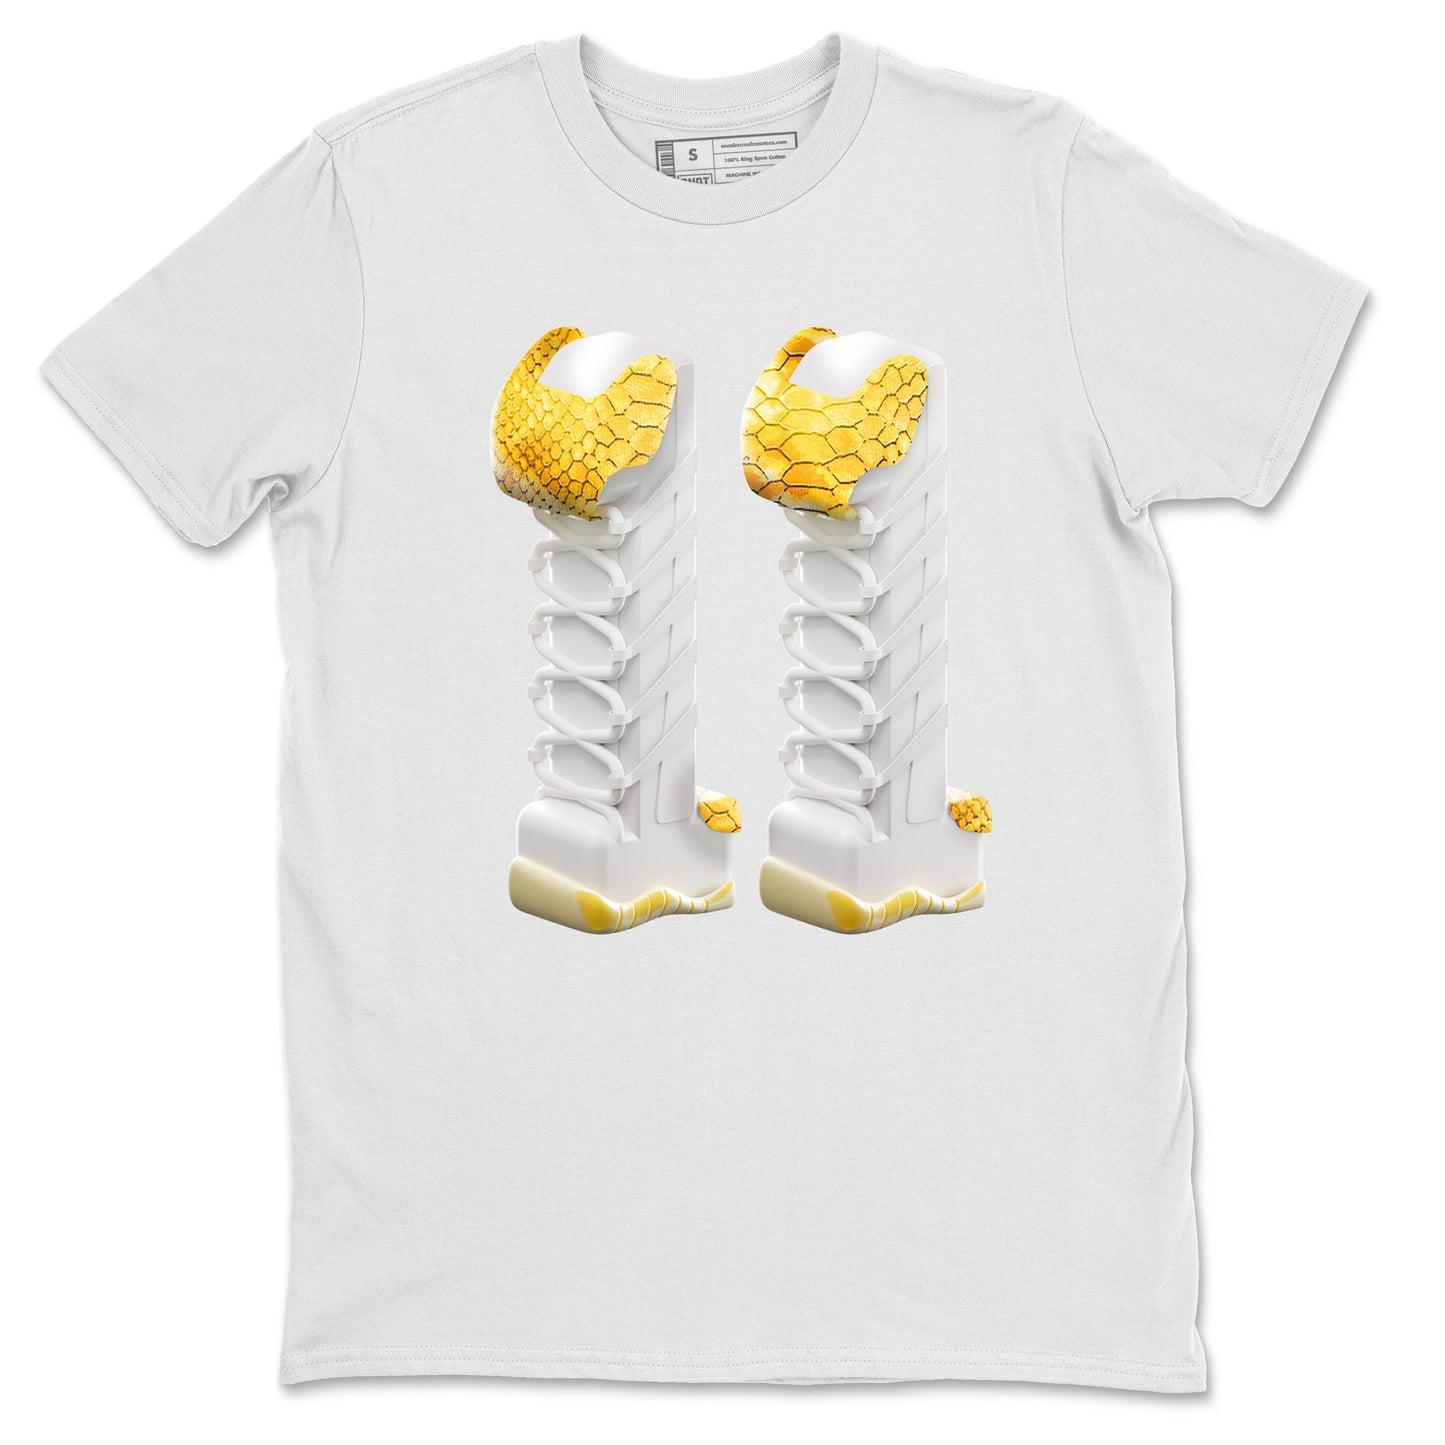 Air Jordan 11 Yellow Python Sneaker Match Tees 3D Number 11 Shirts AJ11 Yellow Python Drip Gear Zone Unisex Shirts White 2